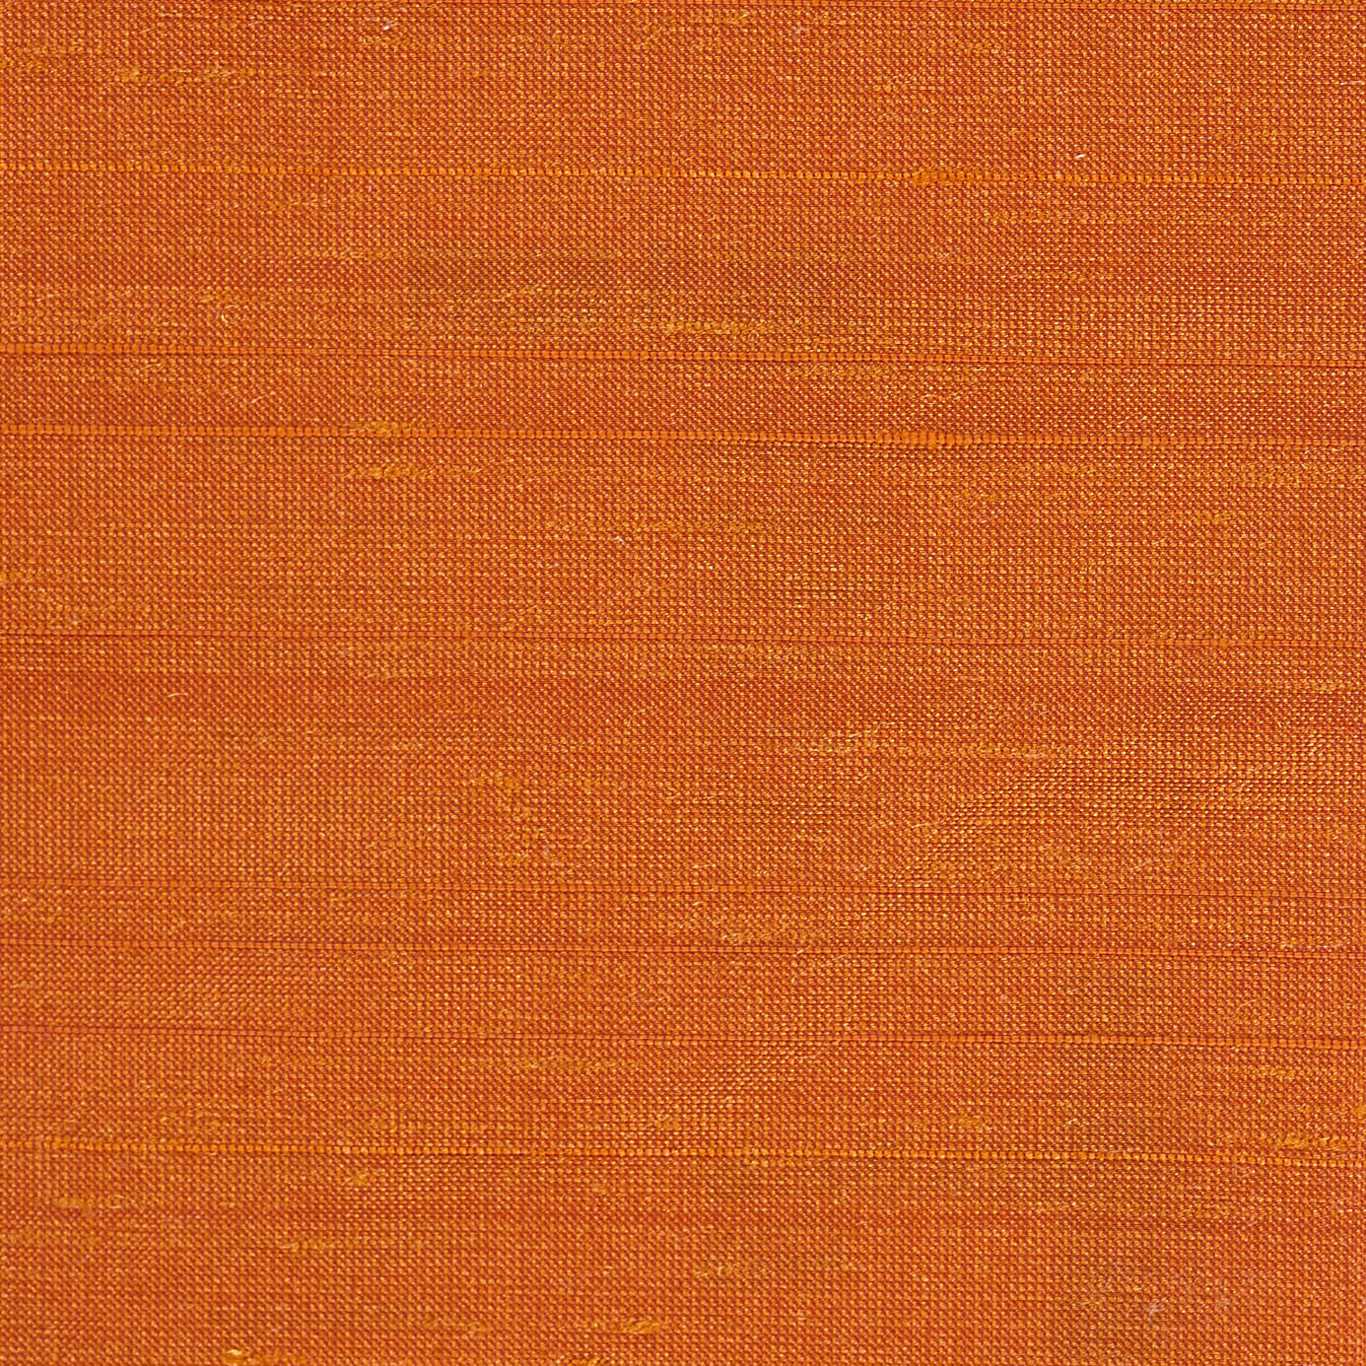 Deflect Fabric by Harlequin - HPOL440481 - Pumpkin